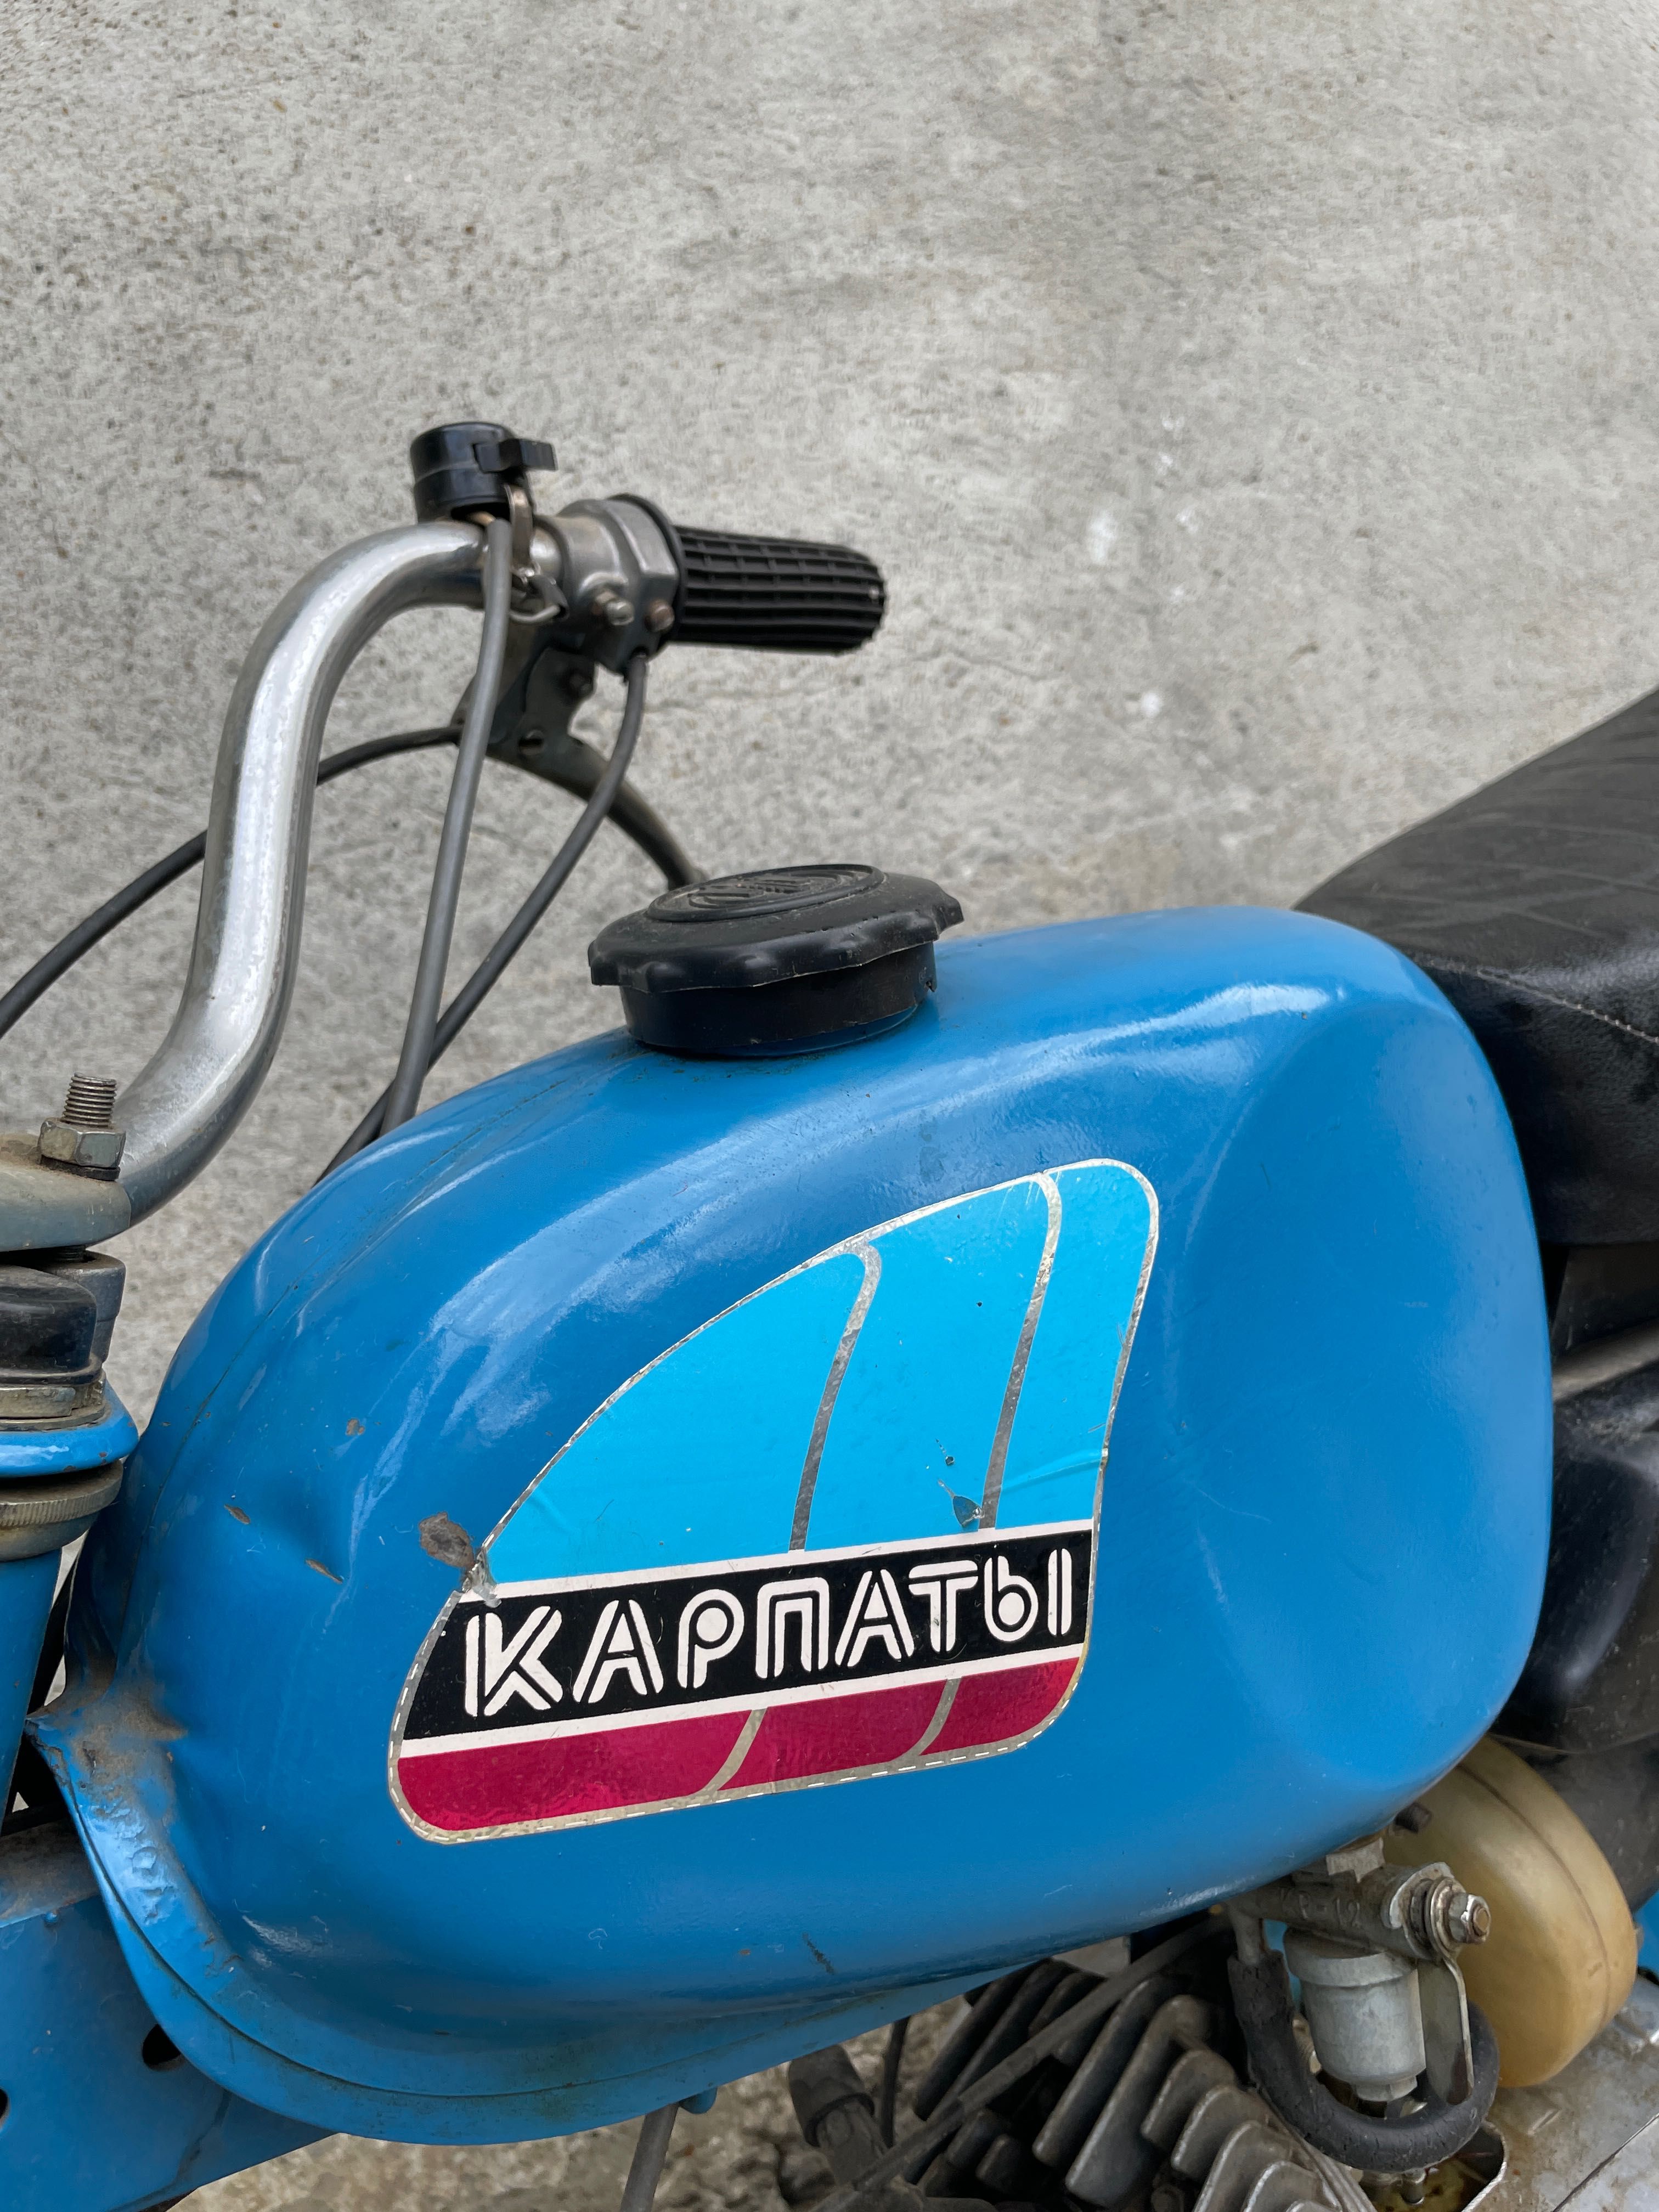 Motocicleta Carpati